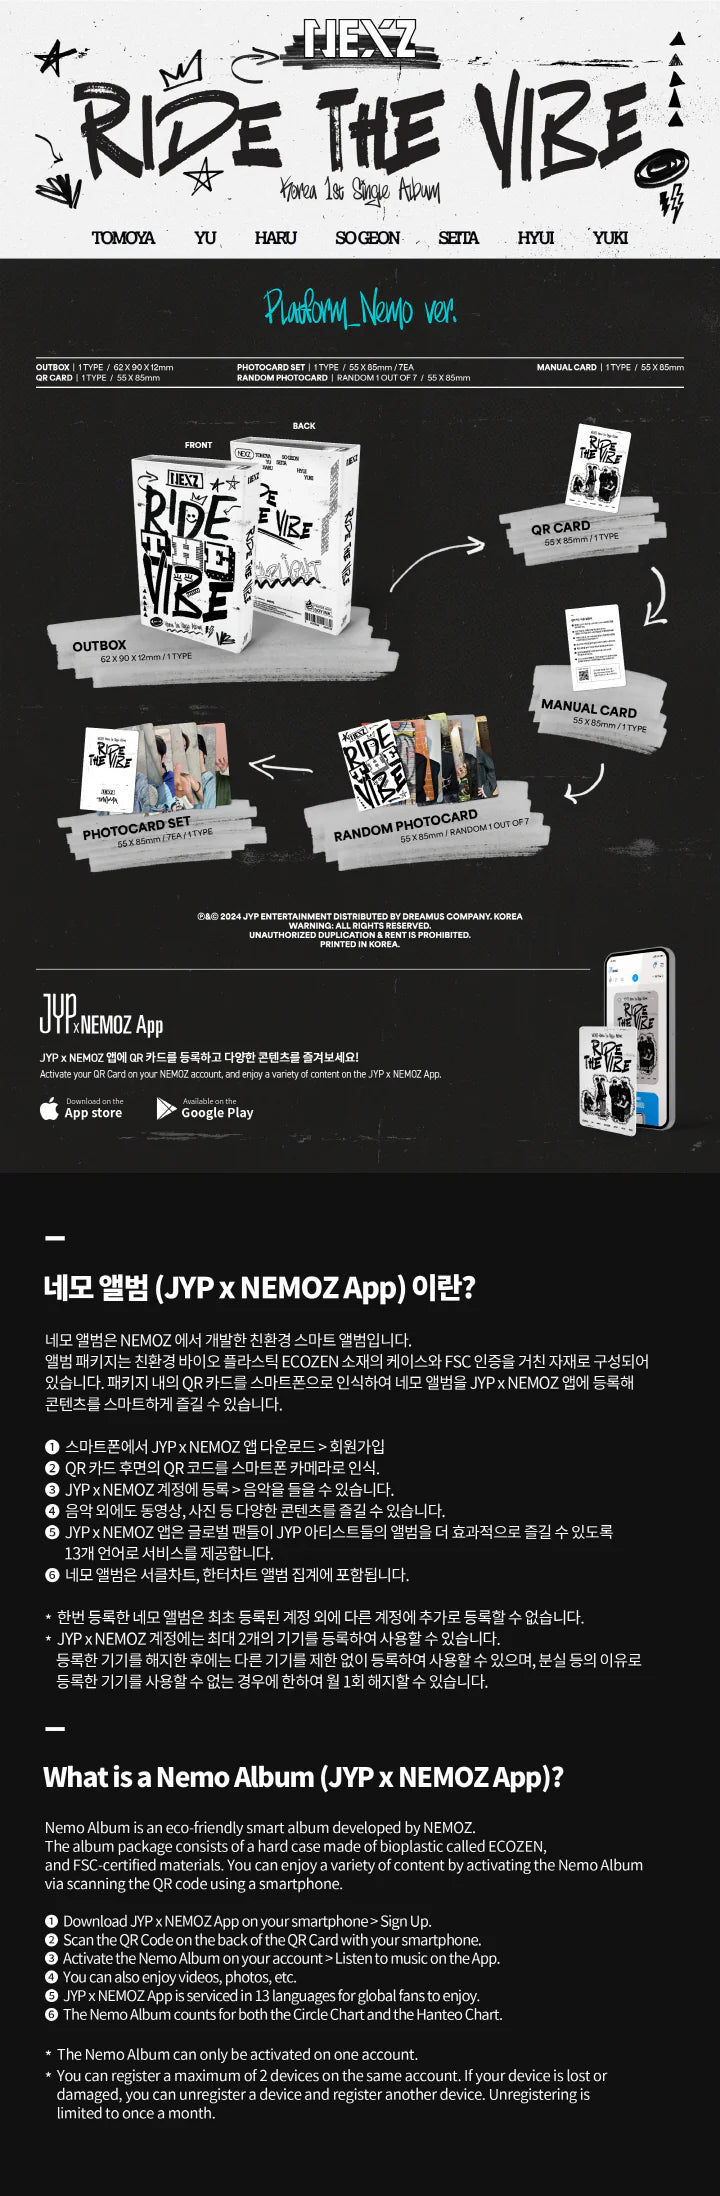 NEXZ - Ride the Vibe (Korea 1st Single Album) (Platform) Infographic